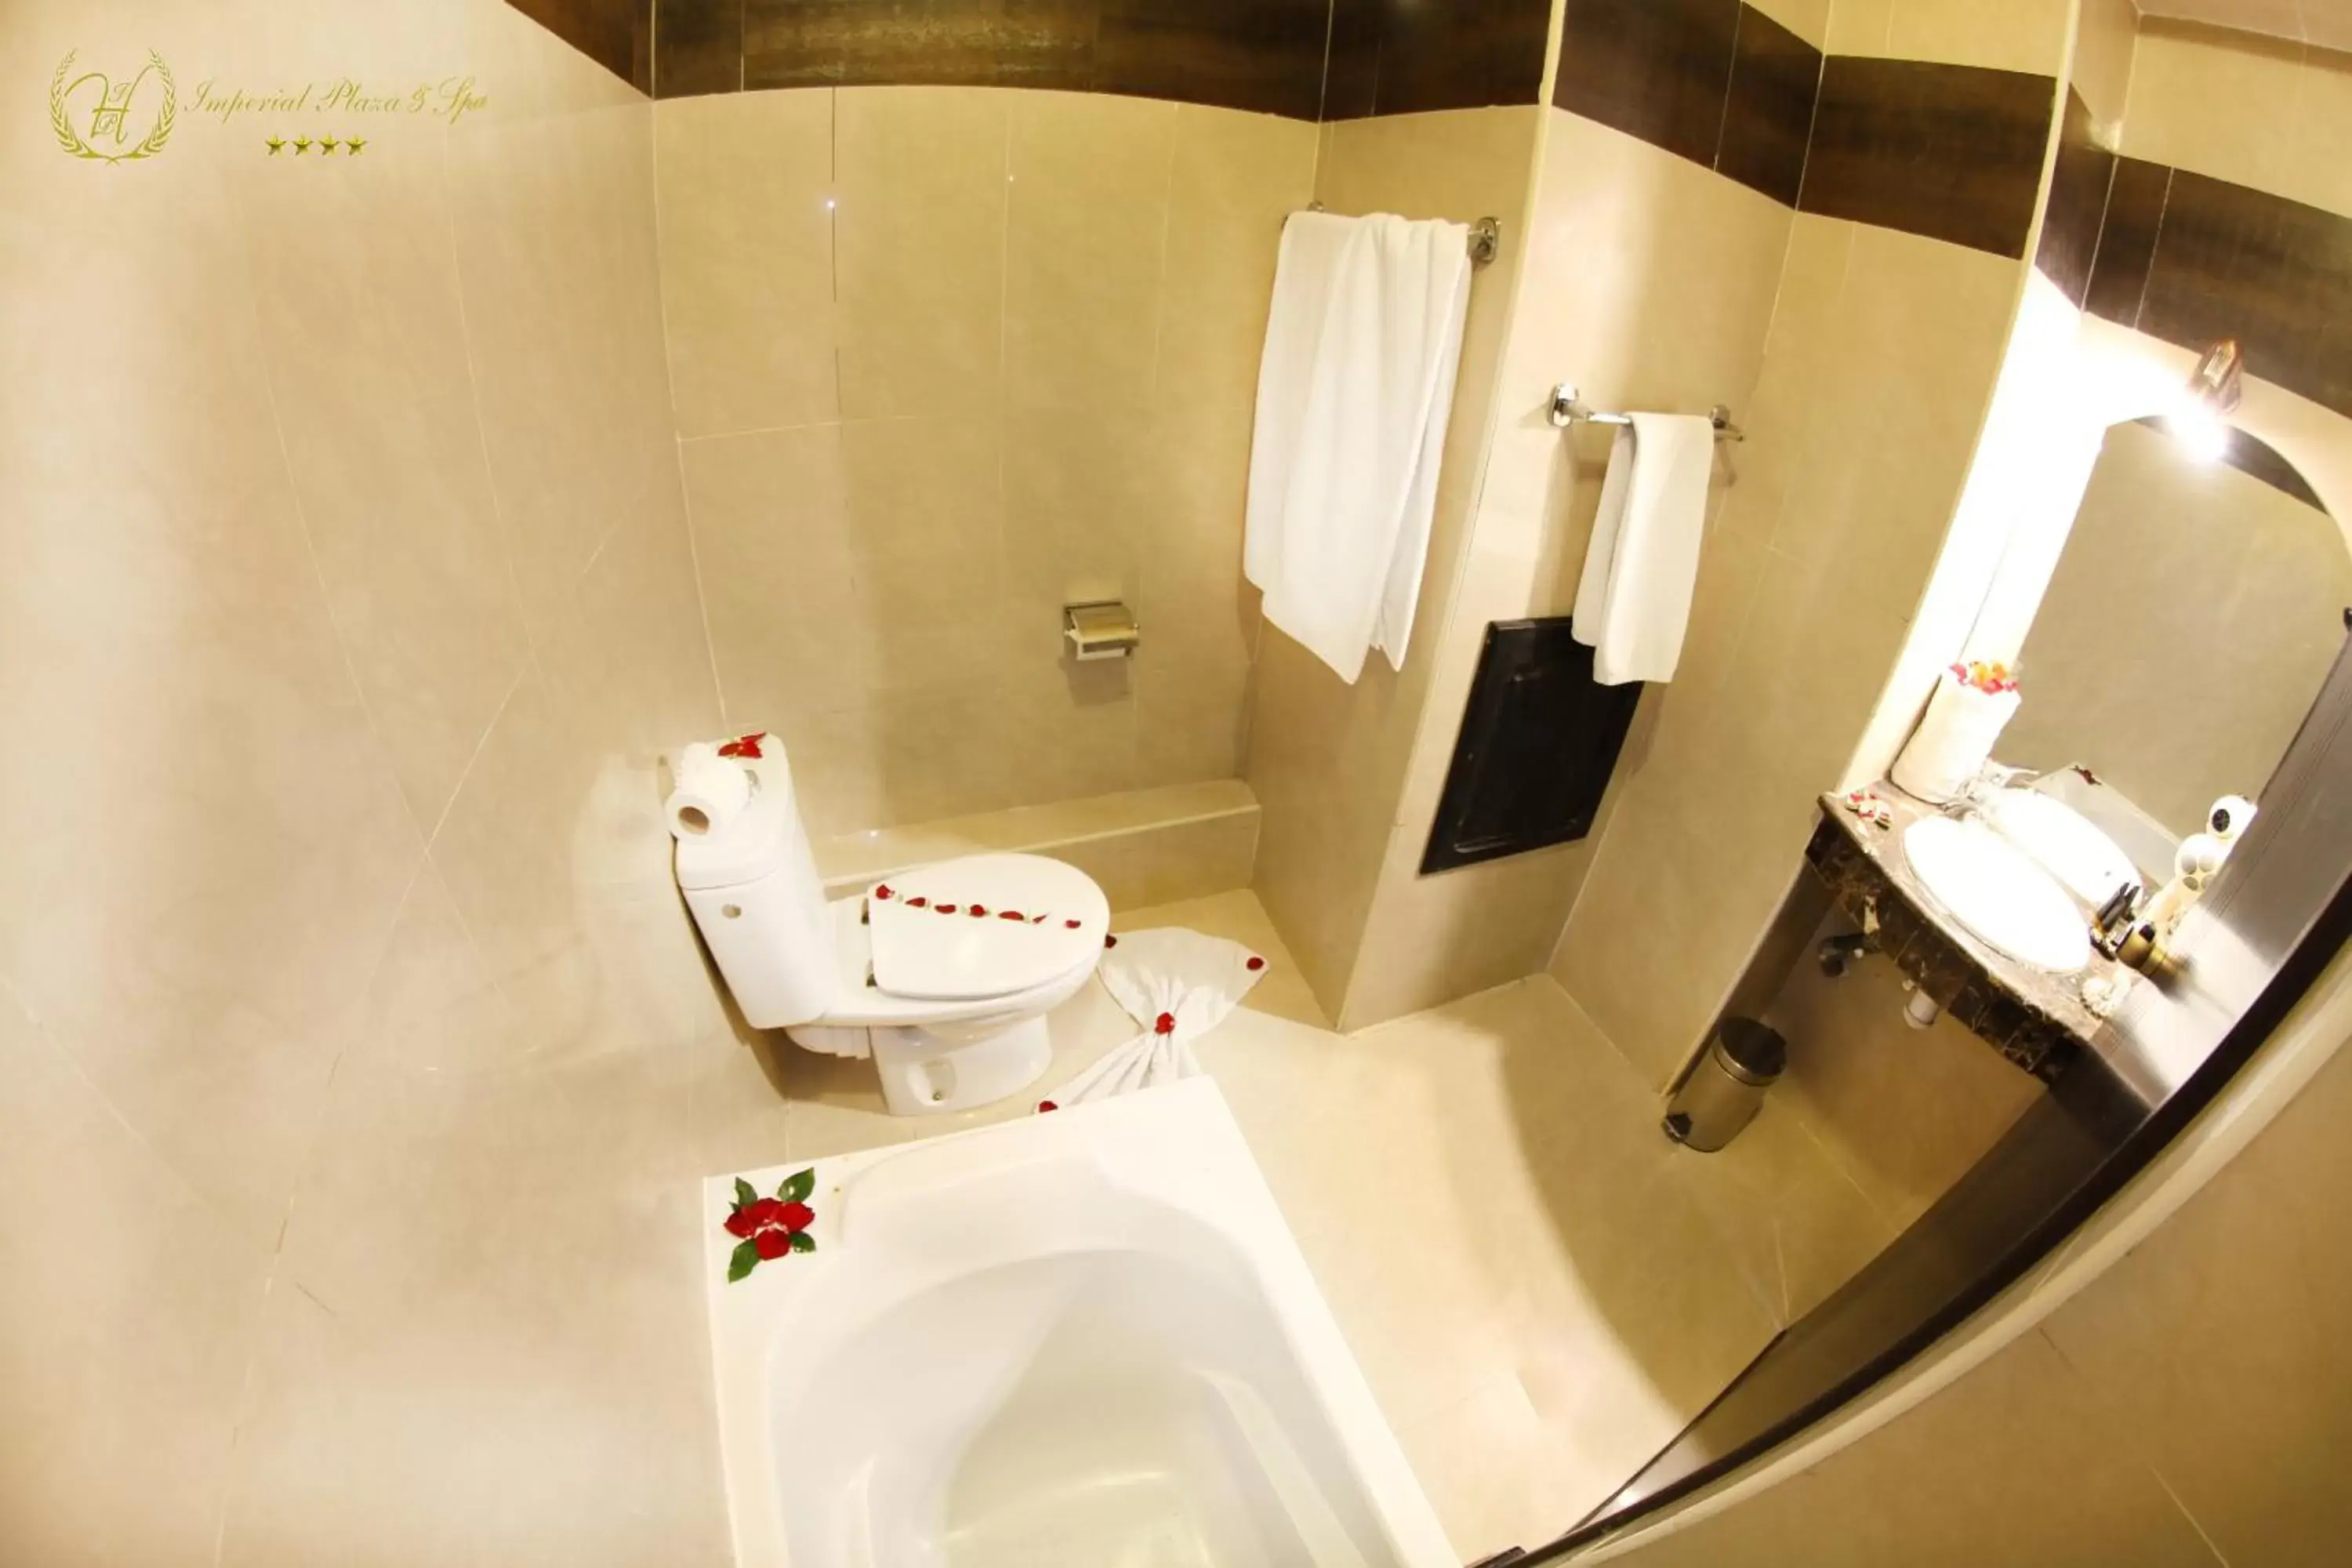 Bathroom in Hotel Imperial Plaza & Spa